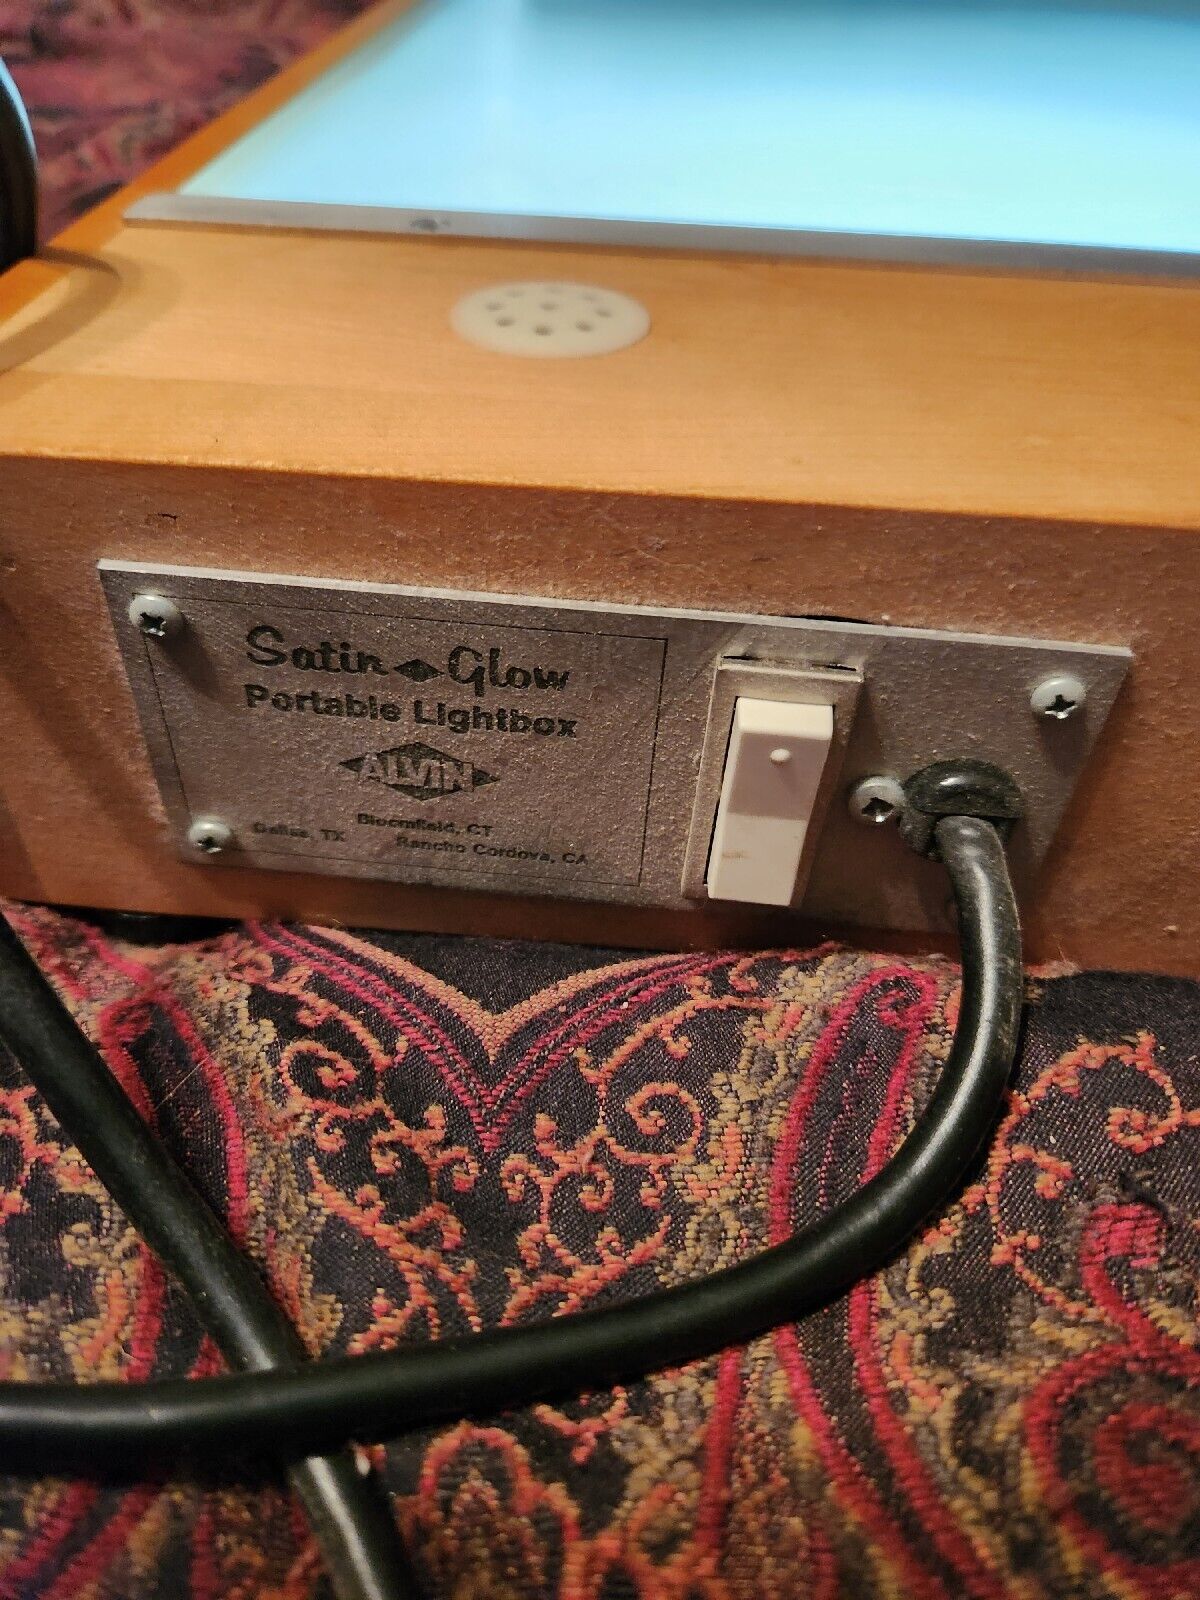 Vintage Alvin Portable Lightbox Works